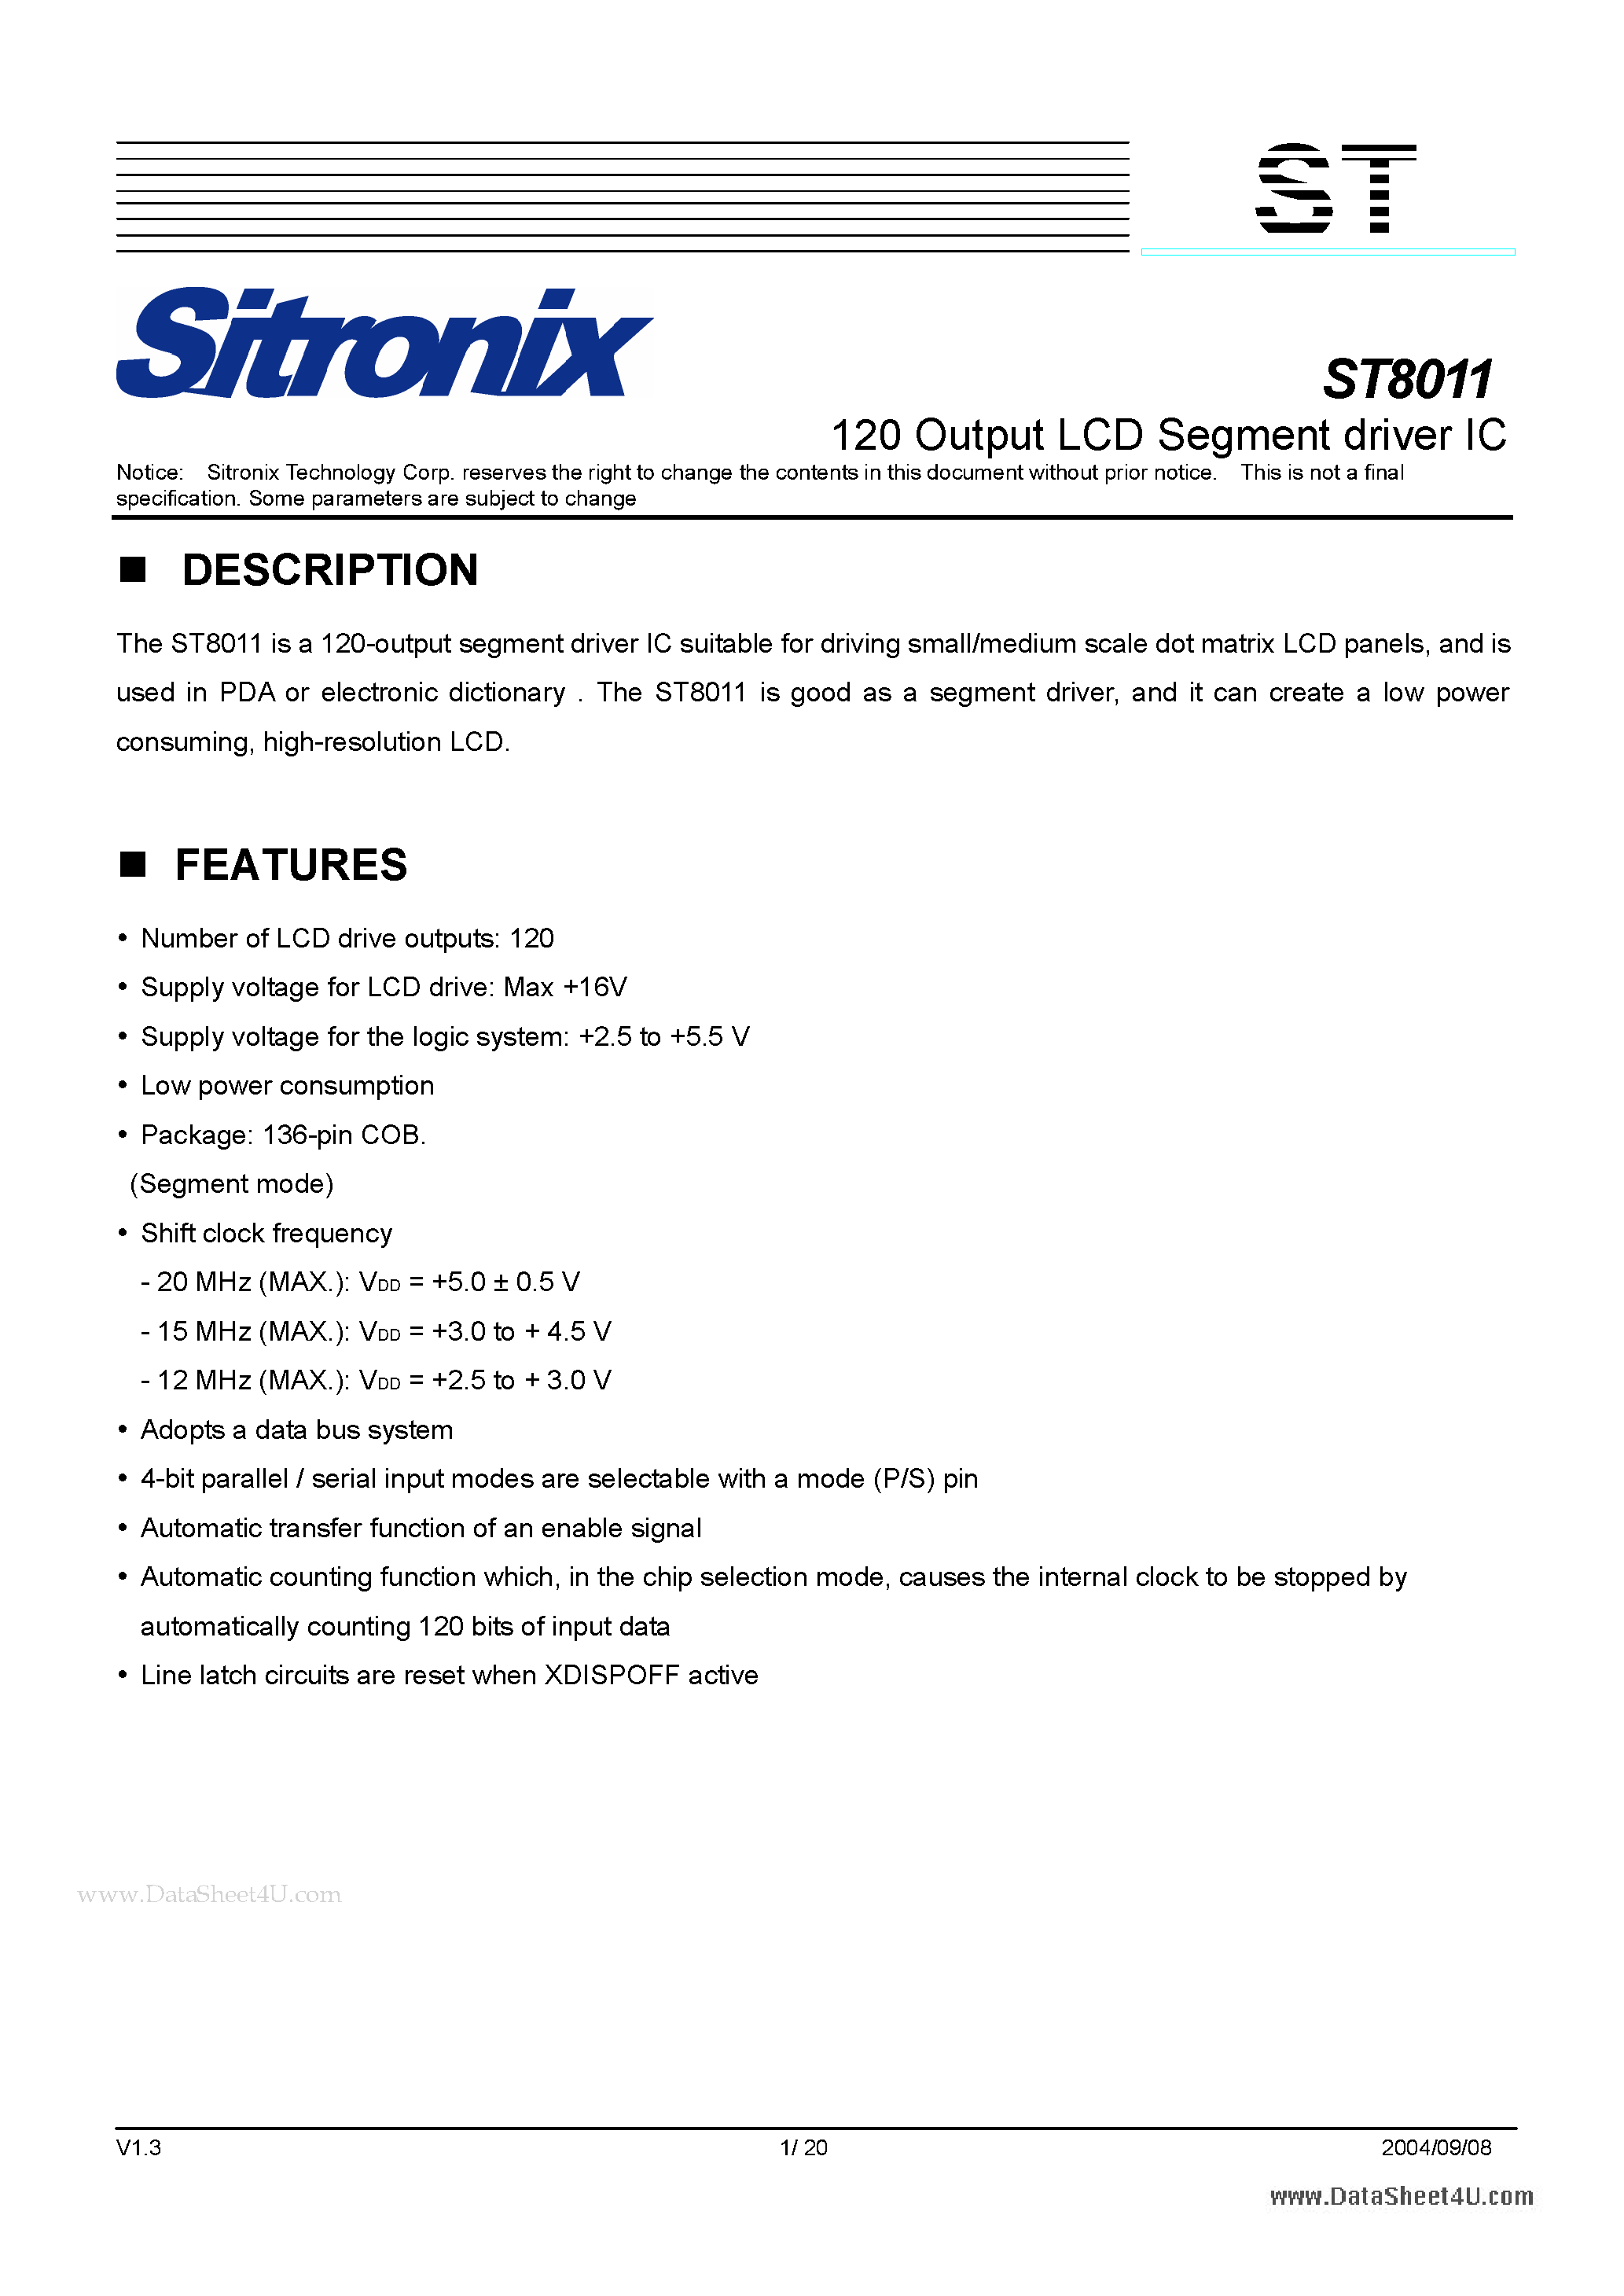 Даташит ST8011 - 120 Output LCD Segment Driver IC страница 1